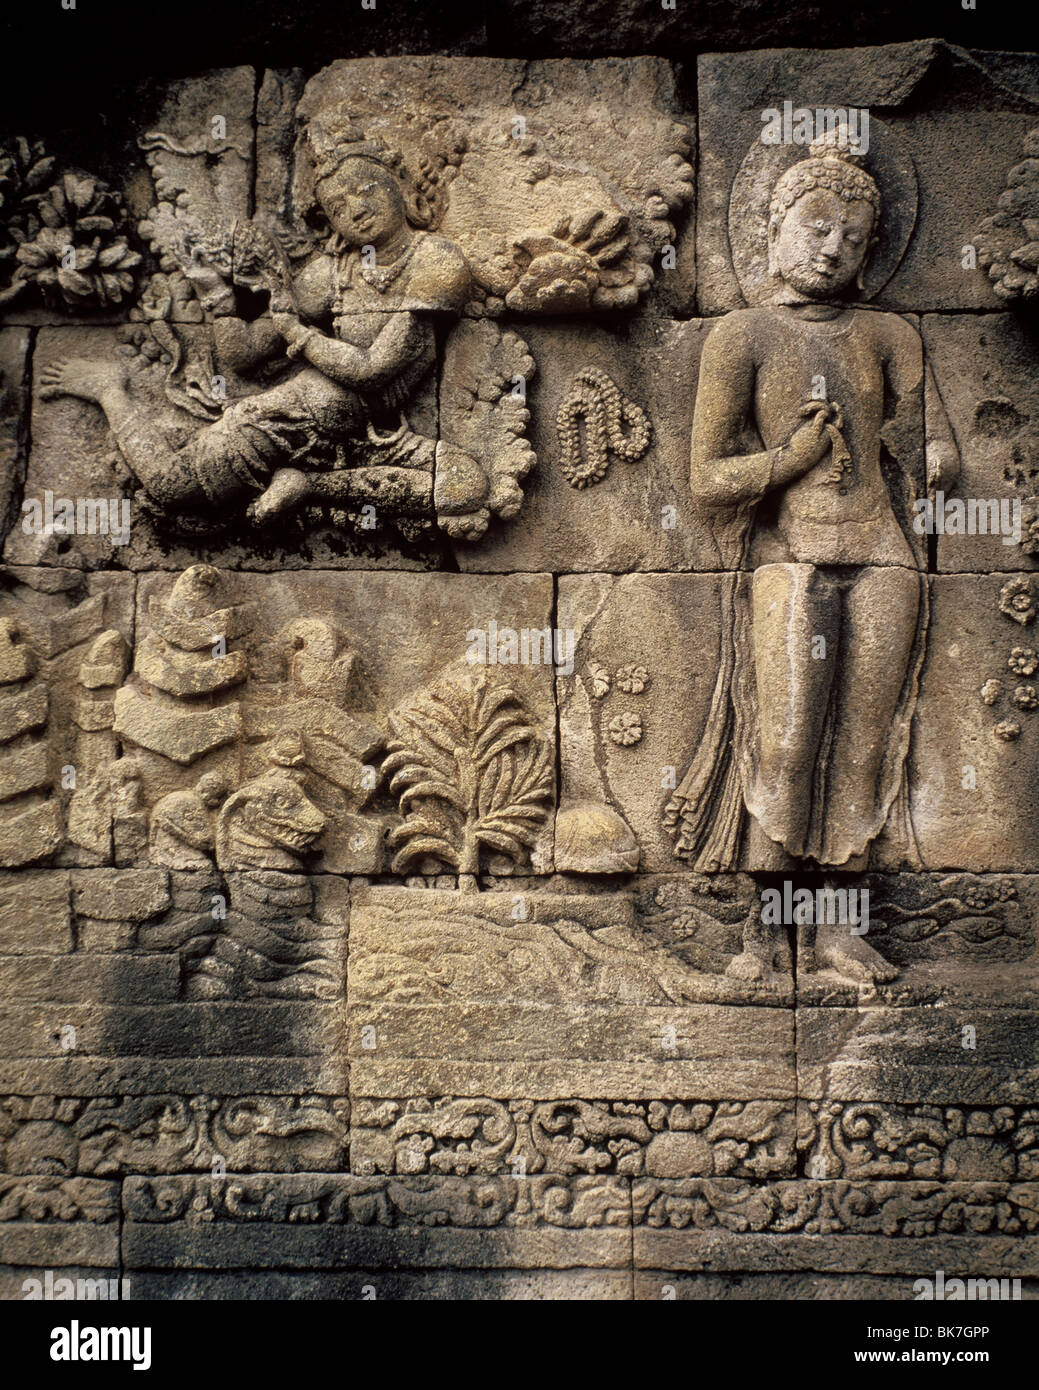 Borobudur, UNESCO World Heritage Site, Java, Indonesia, Southeast Asia, Asia Stock Photo